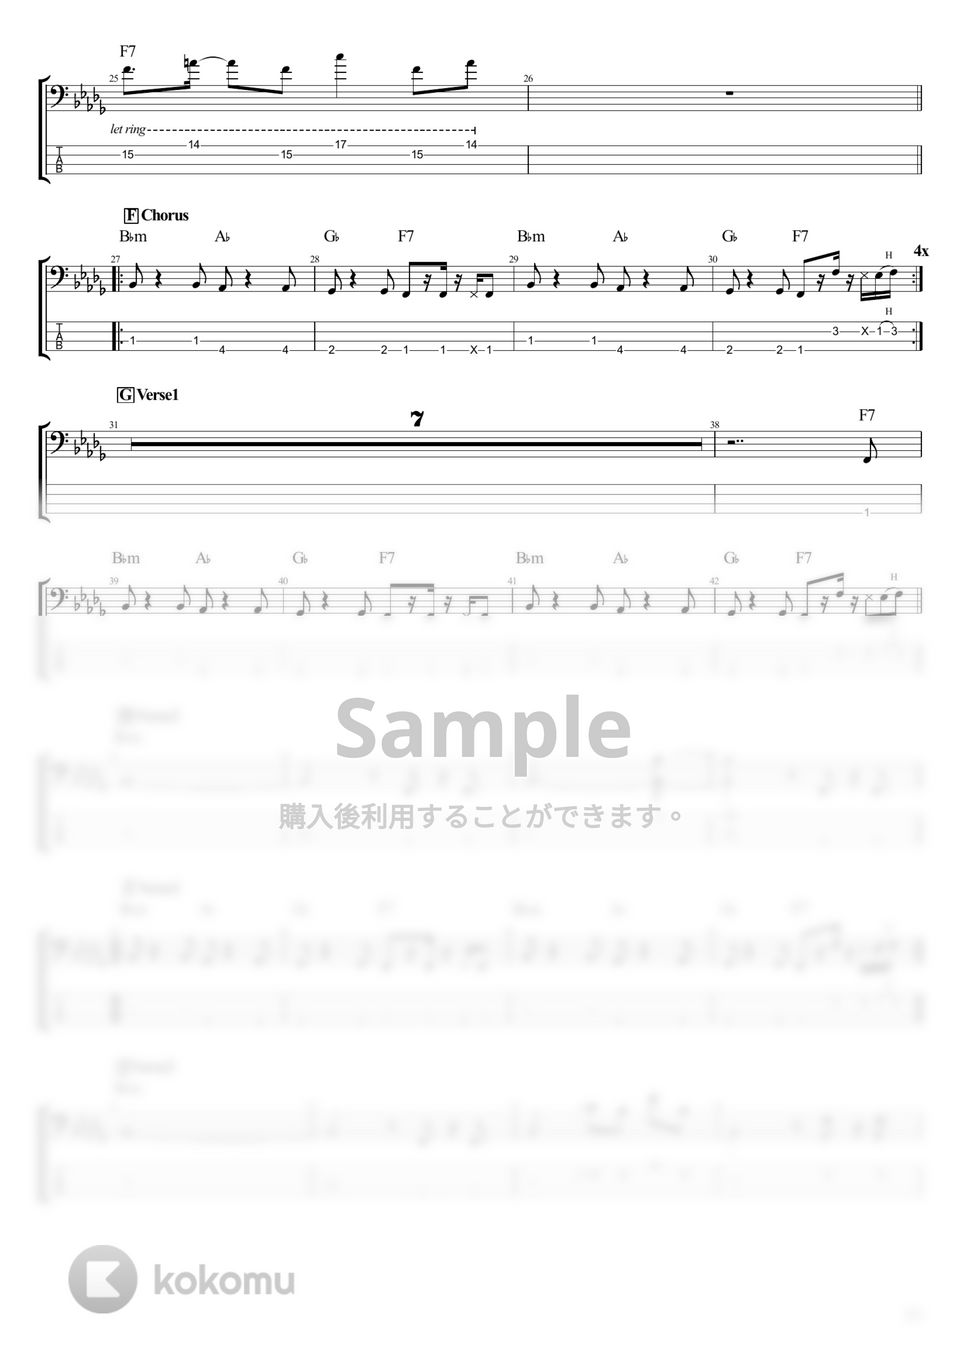 SEKAI NO OWARI - Habit (ベース Tab譜 4弦/ホリック) by T's bass score